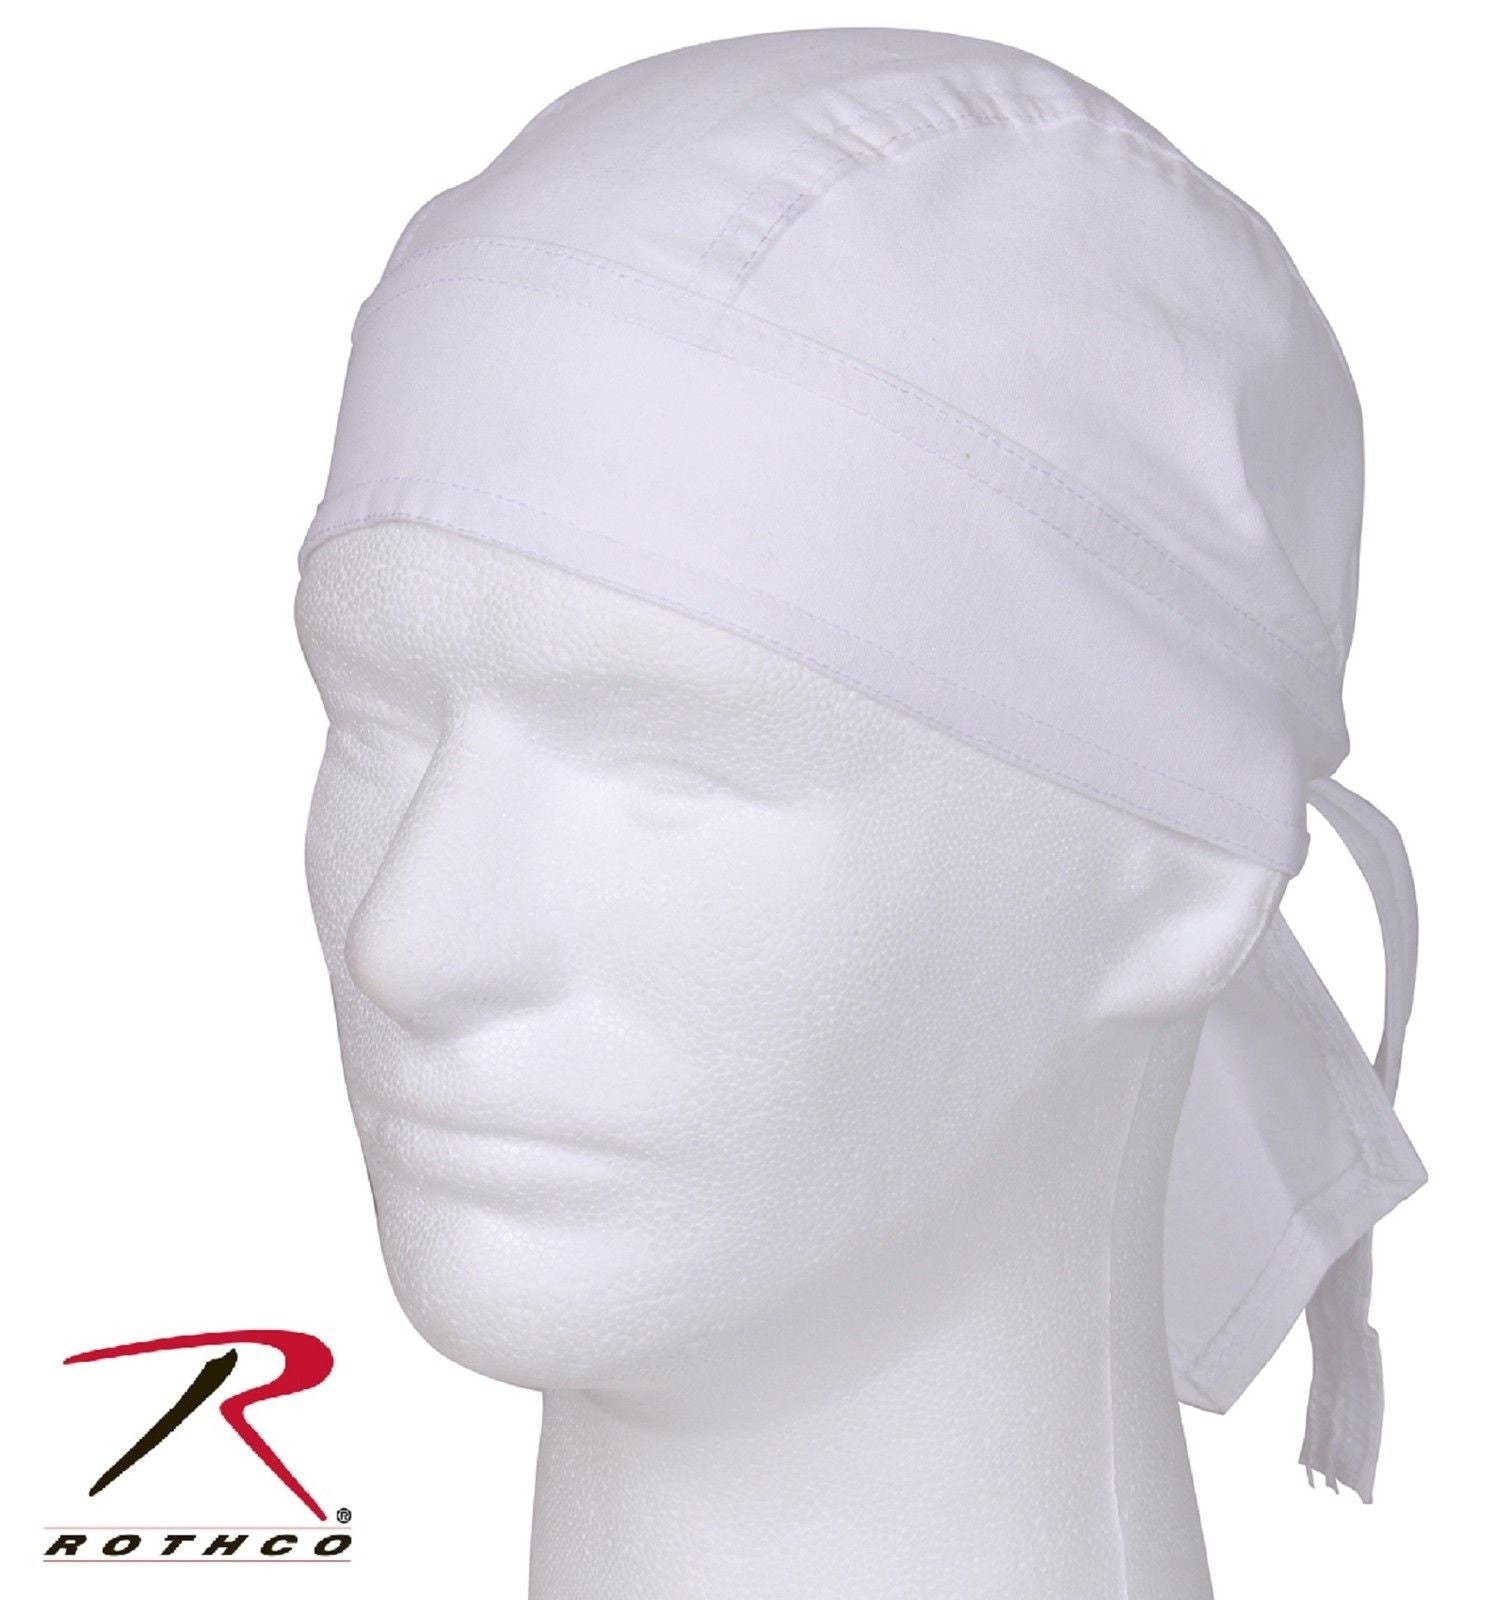 100% Cotton Knit Durag Headwrap | Doo Rag for Women